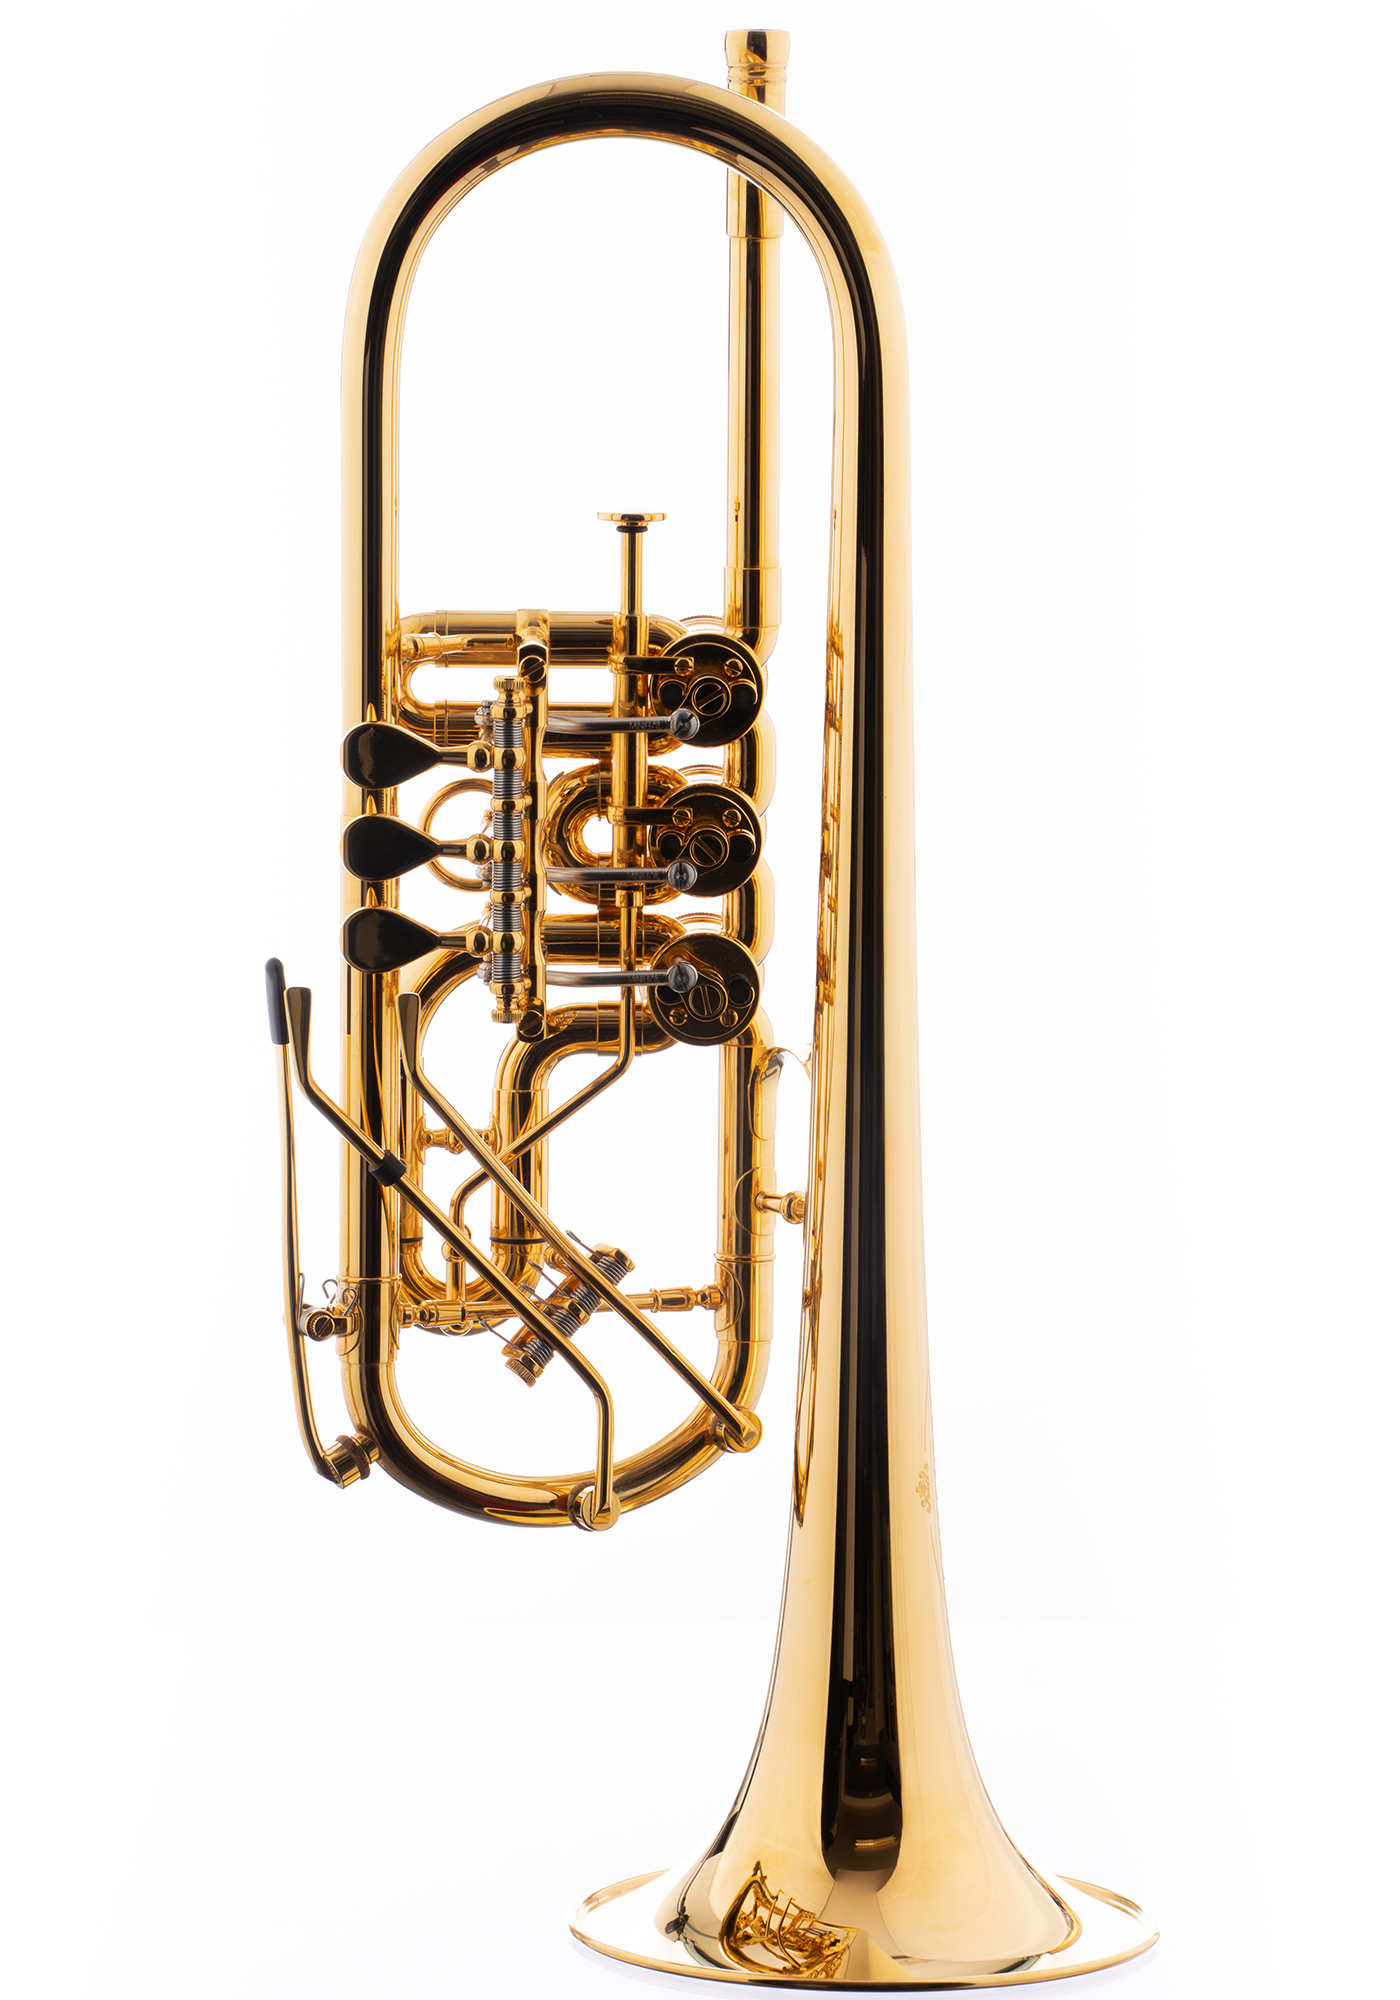 Schagerl C-Trumpet "WIEN HEAVY" gold plated